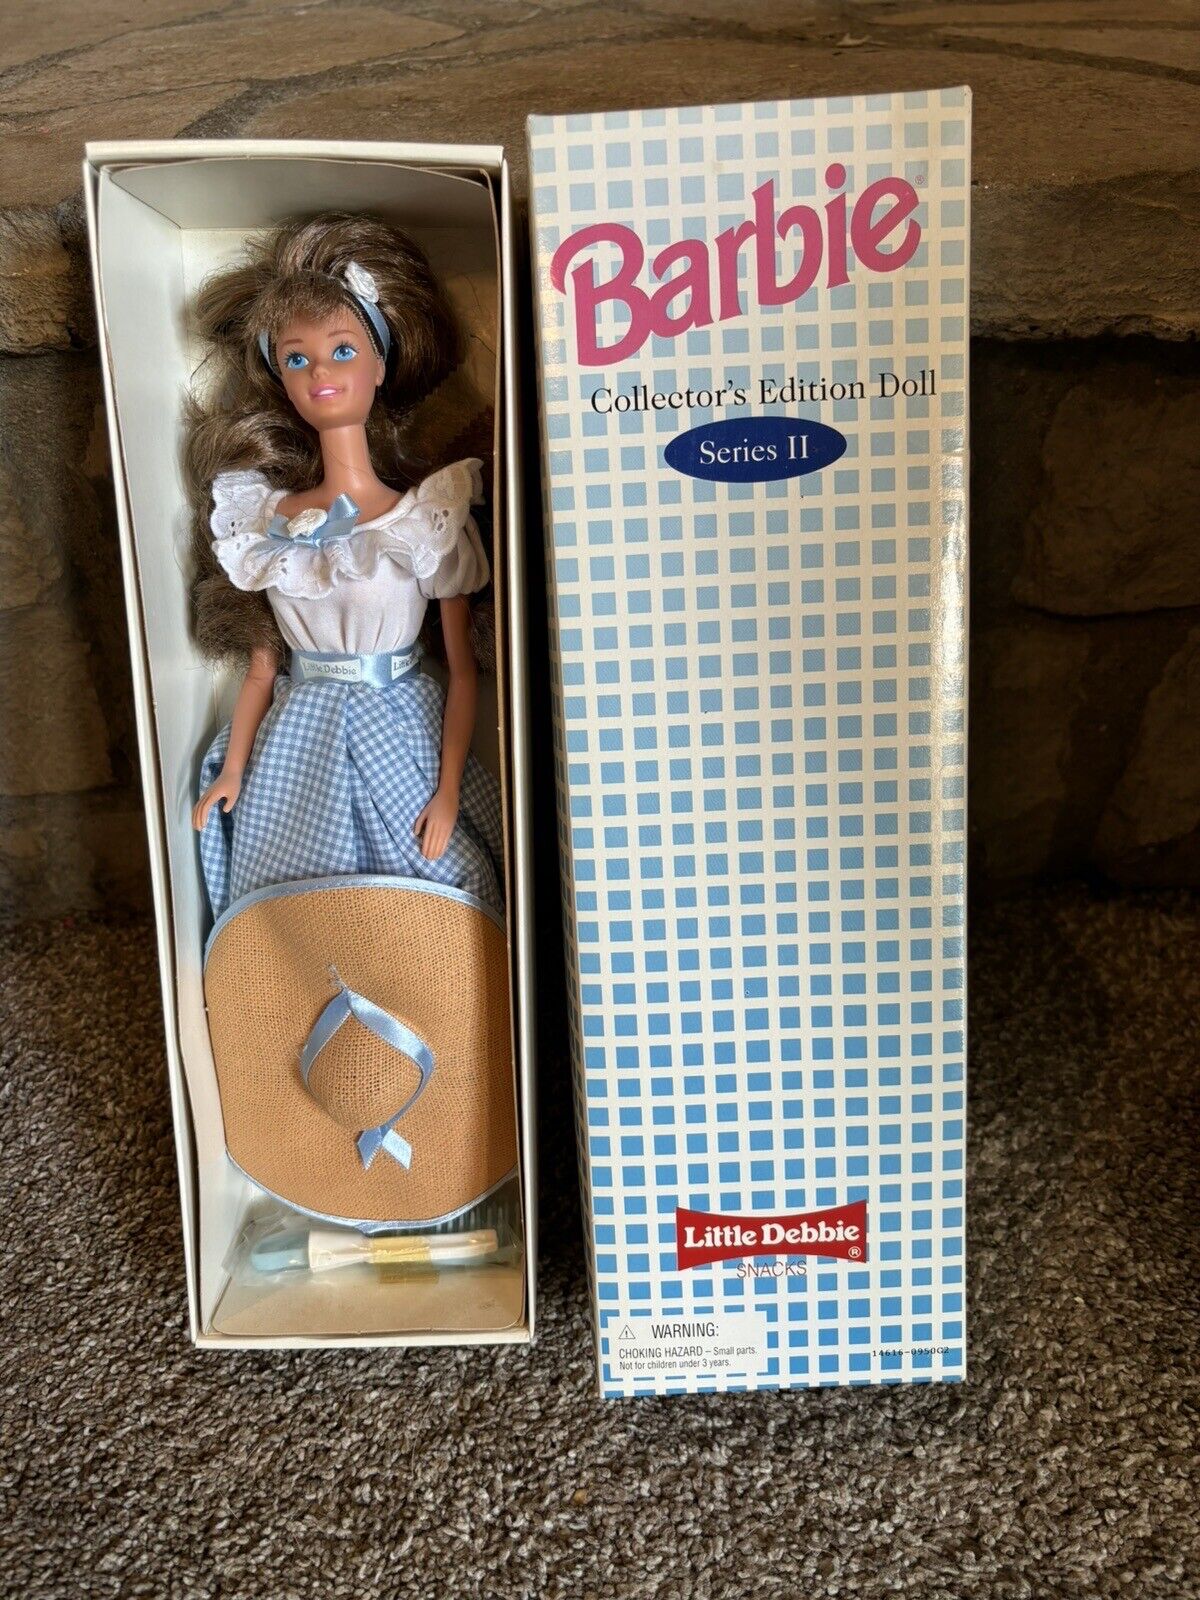 Vintage 1997 Little Debbie Collector Edition Barbie Doll By Mattel Series III